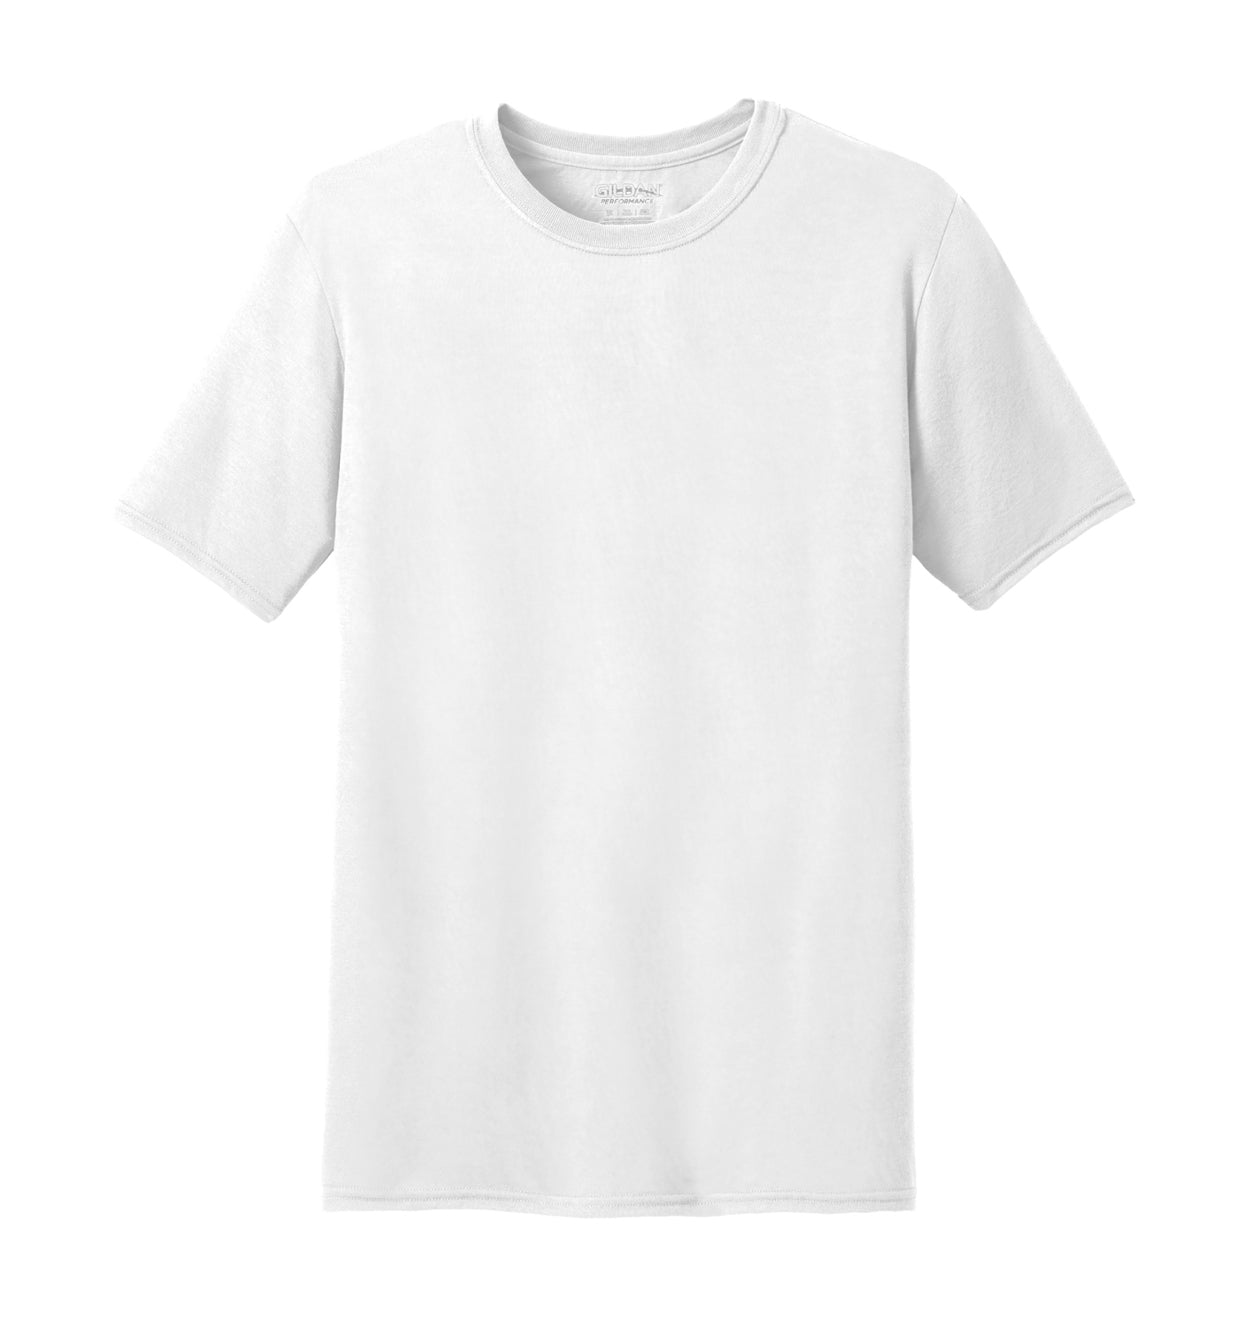 Sublimation Gildan White Short Sleeve T-Shirt (cotton feel)